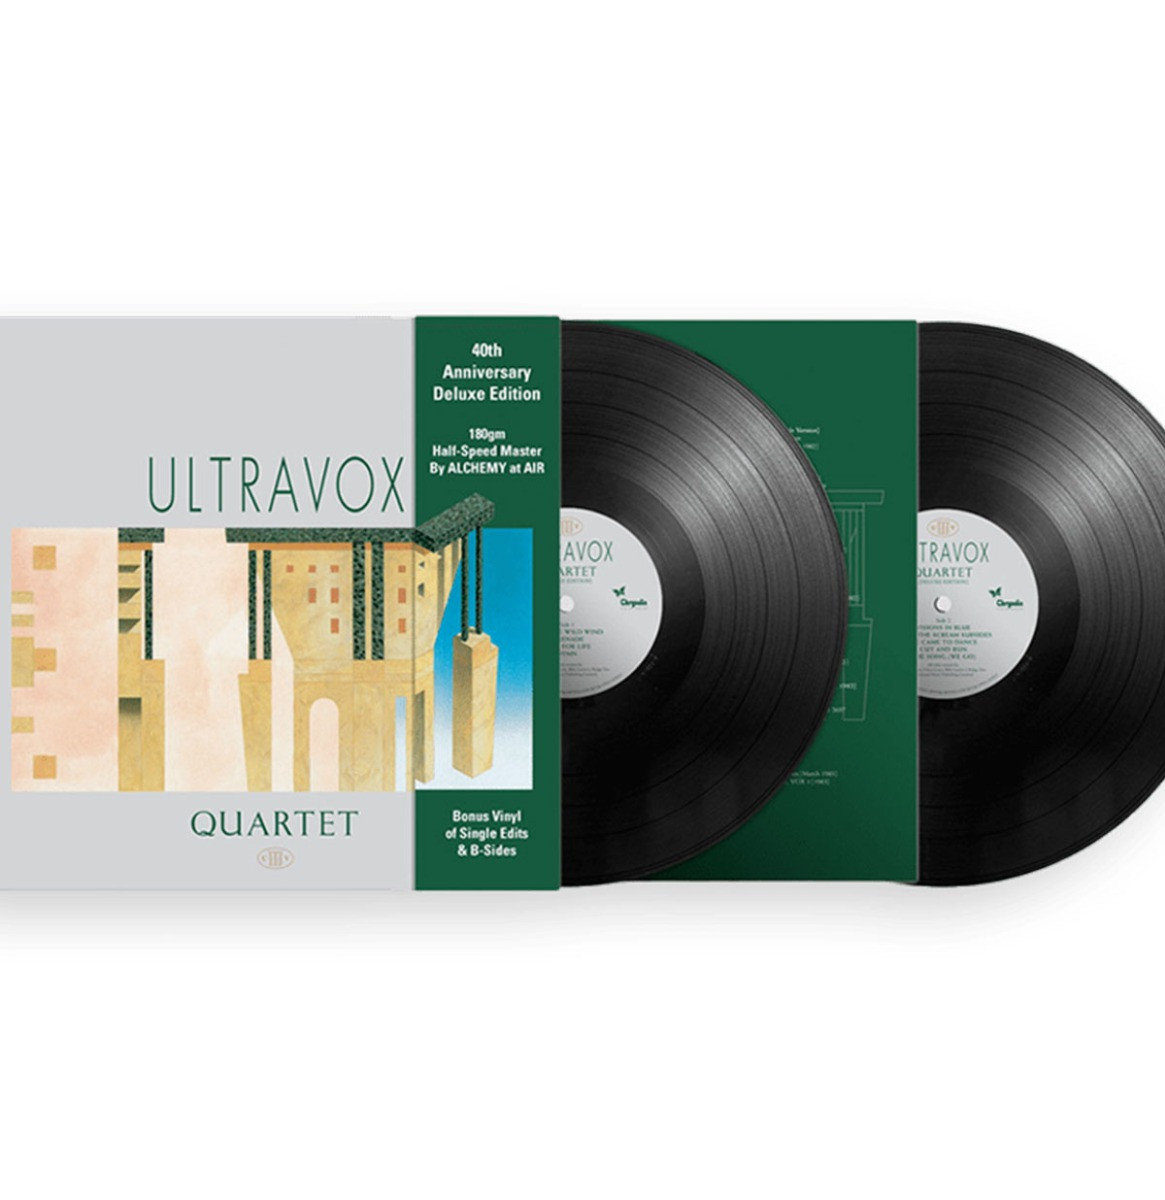 Ultravox - Quartet (Deluxe Edition) (Half-Speed Master) 2LP